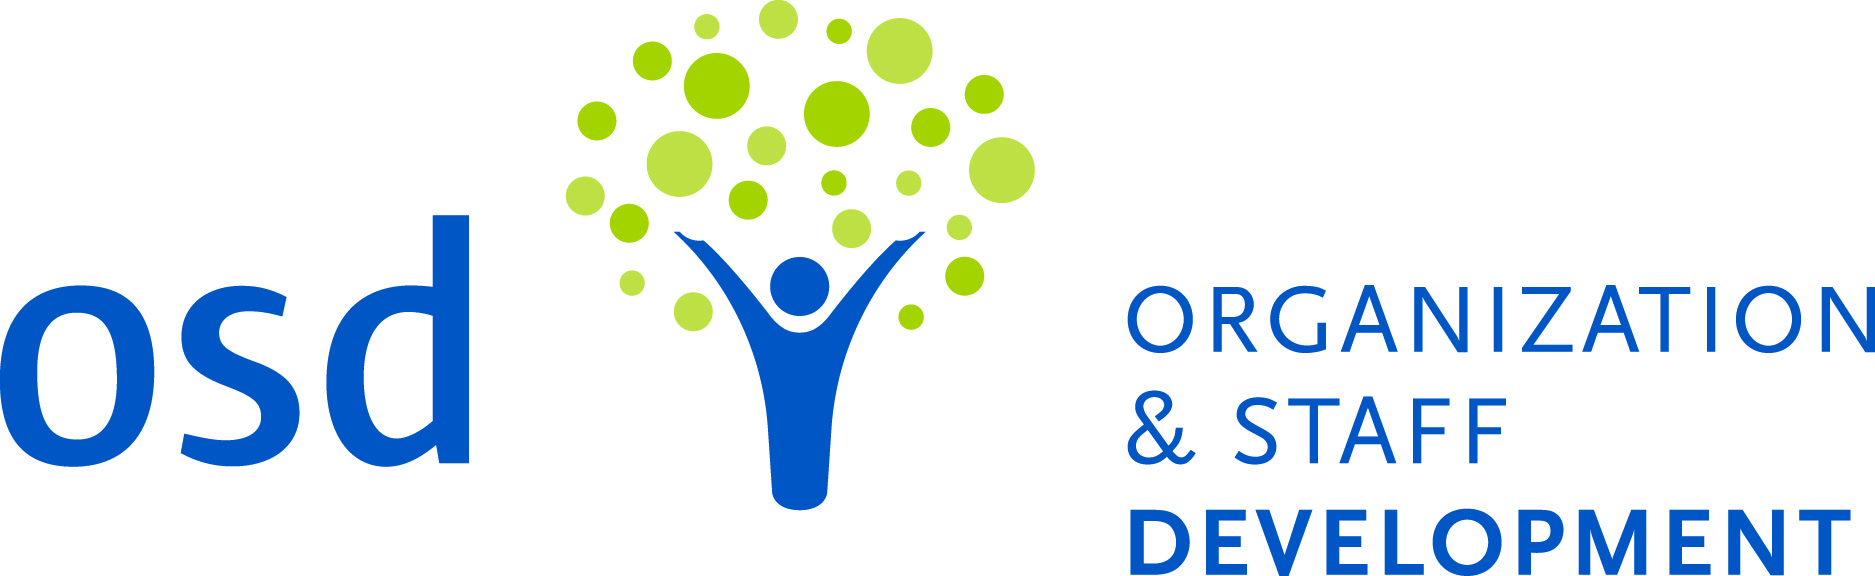 Organization and Staff Development logo